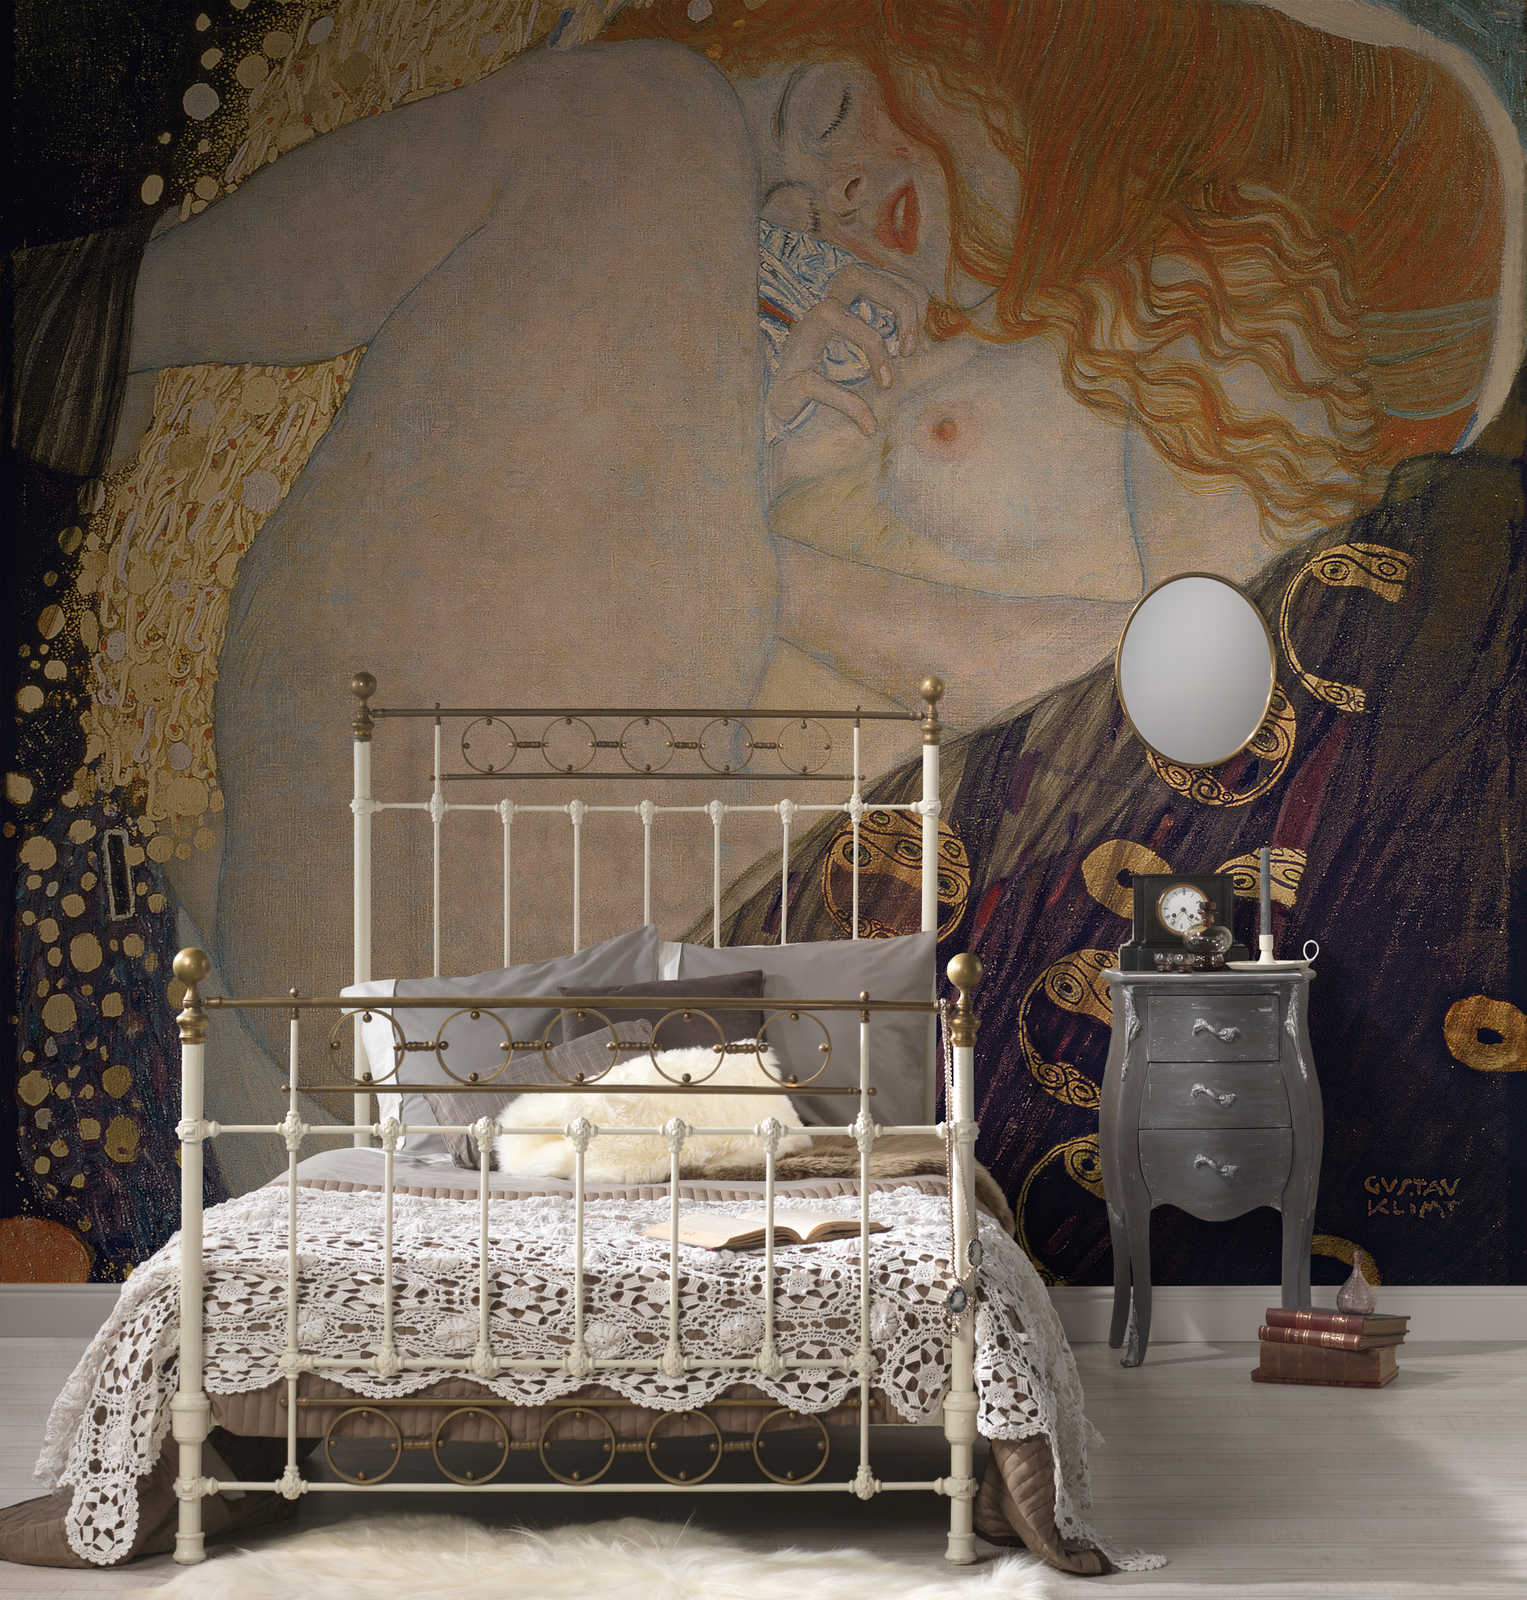             Fototapete "Danae" von Gustav Klimt
        